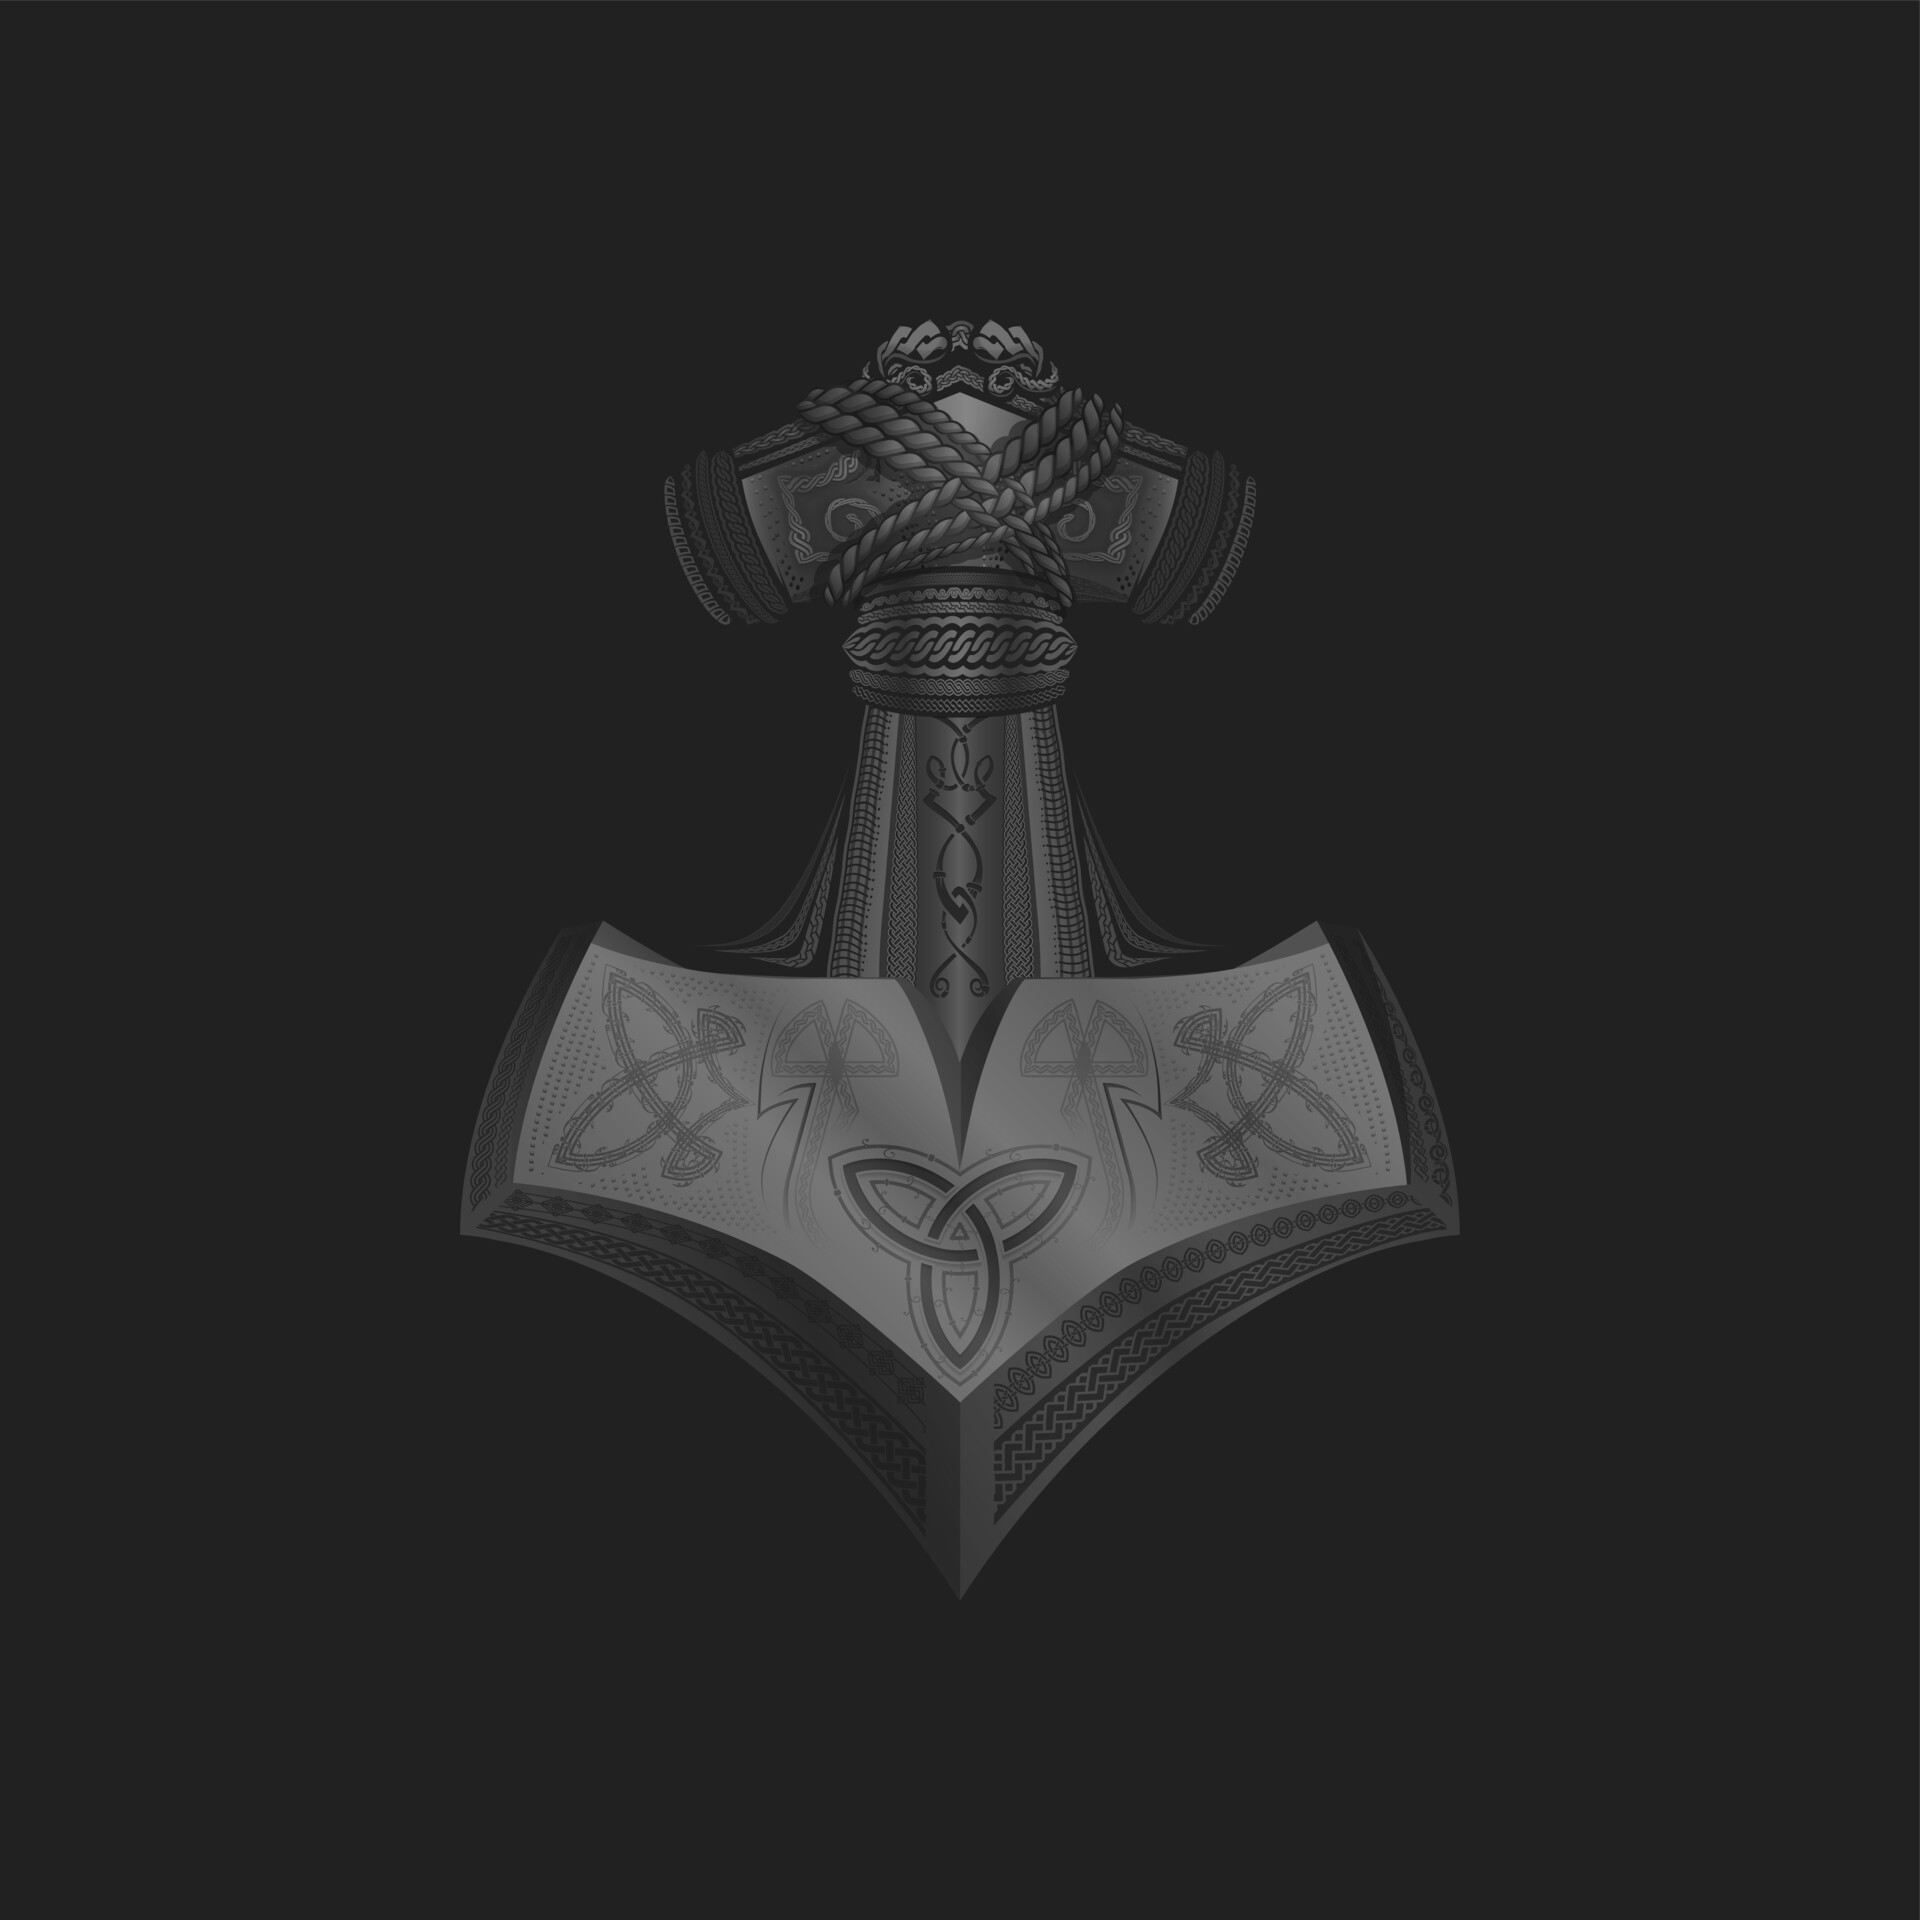 ArtStation - Mjolnir Vikings symbol - Thor's hammer in Nordic lore